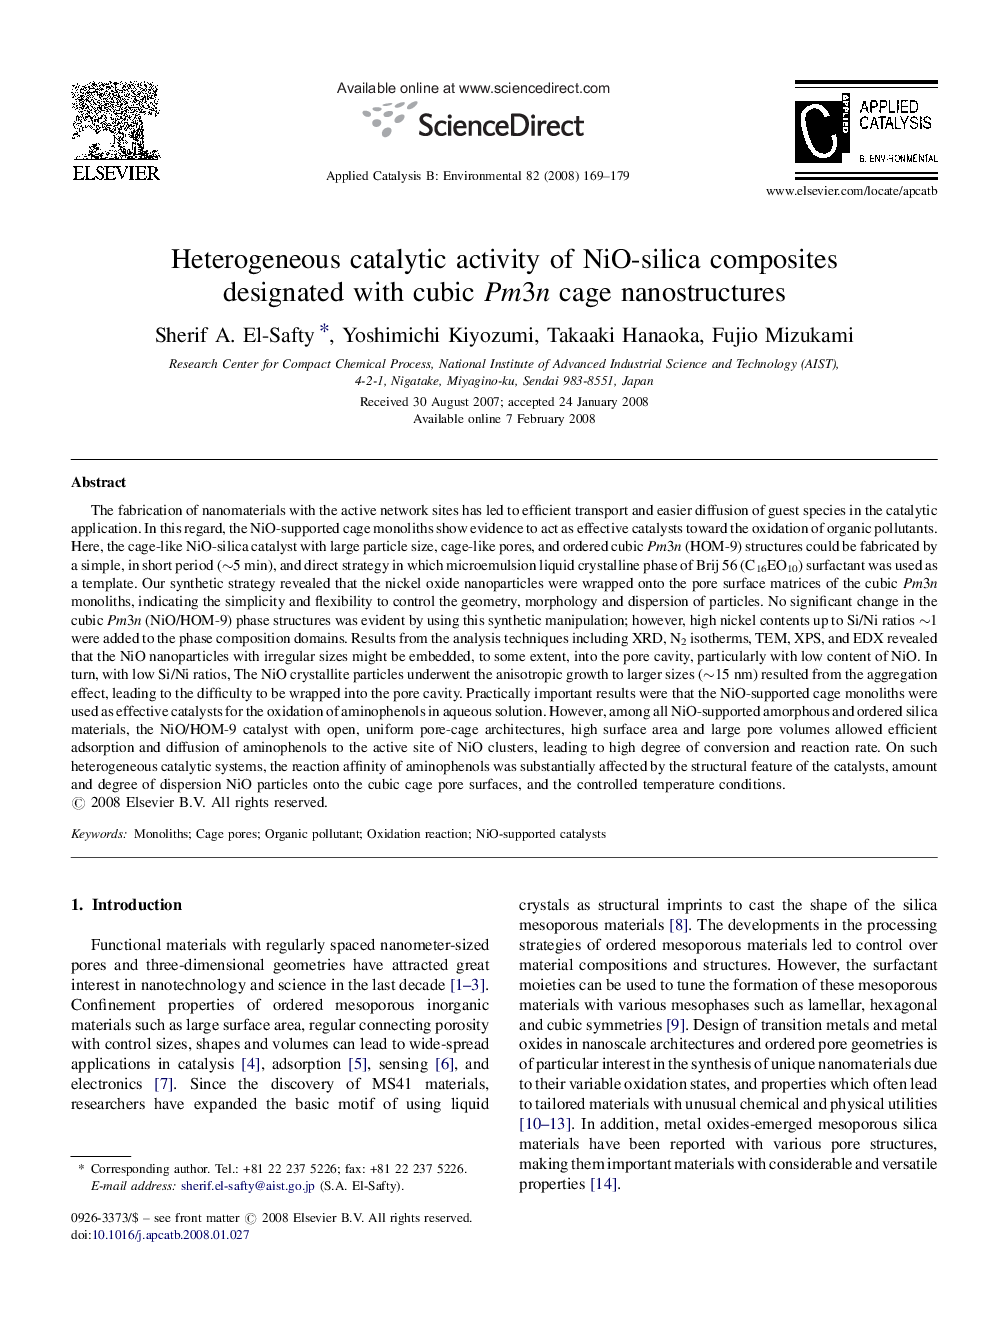 Heterogeneous catalytic activity of NiO-silica composites designated with cubic Pm3n cage nanostructures